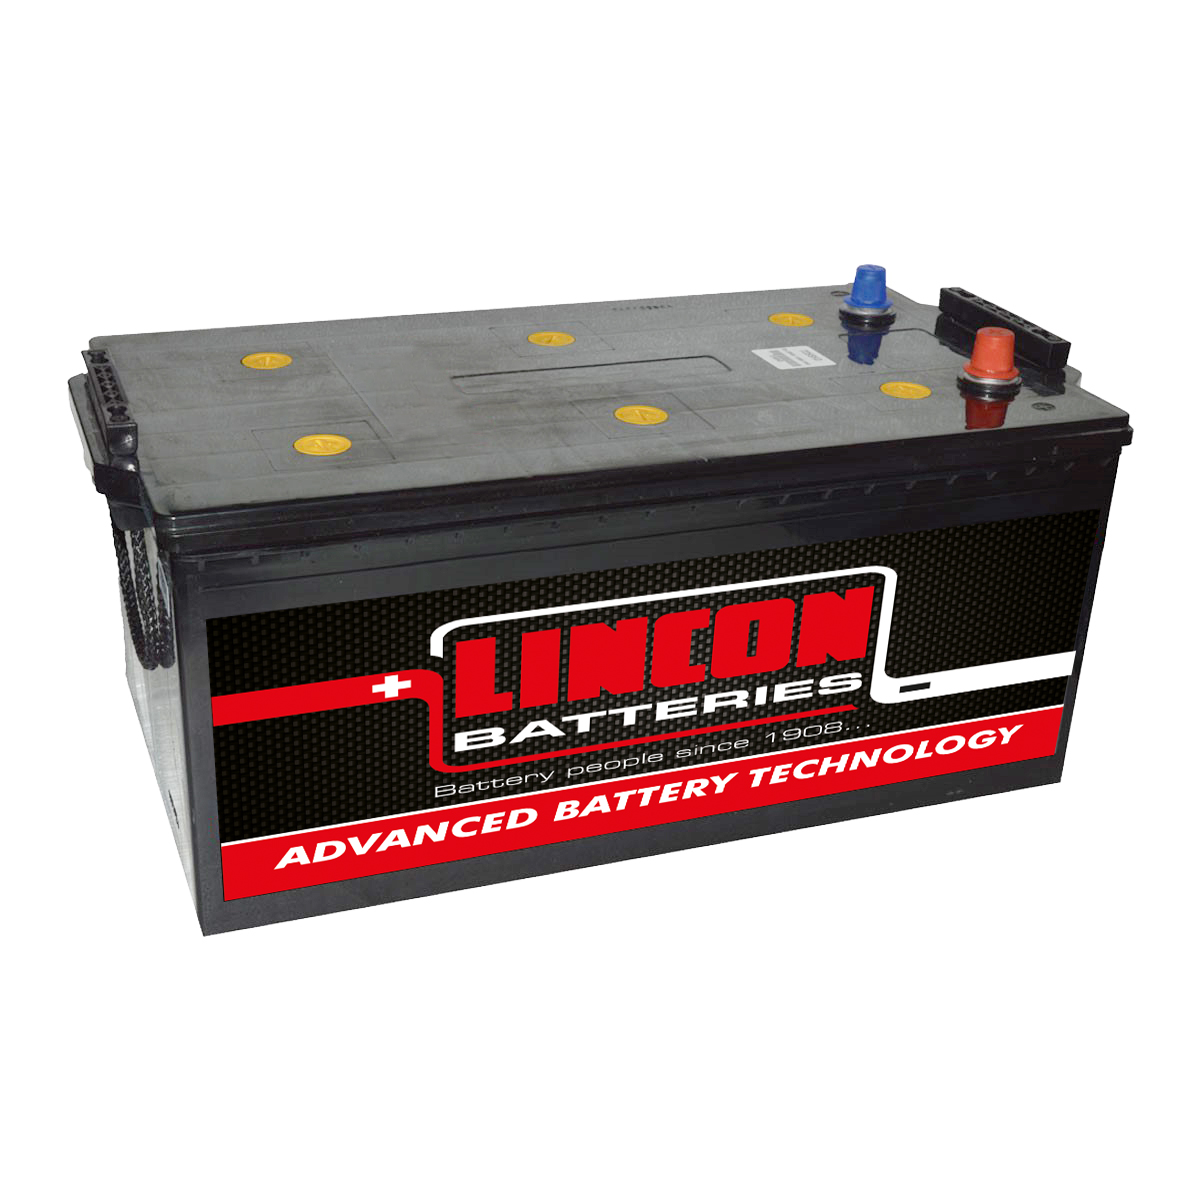 Lincon-SHD-CV-Battery.jpg